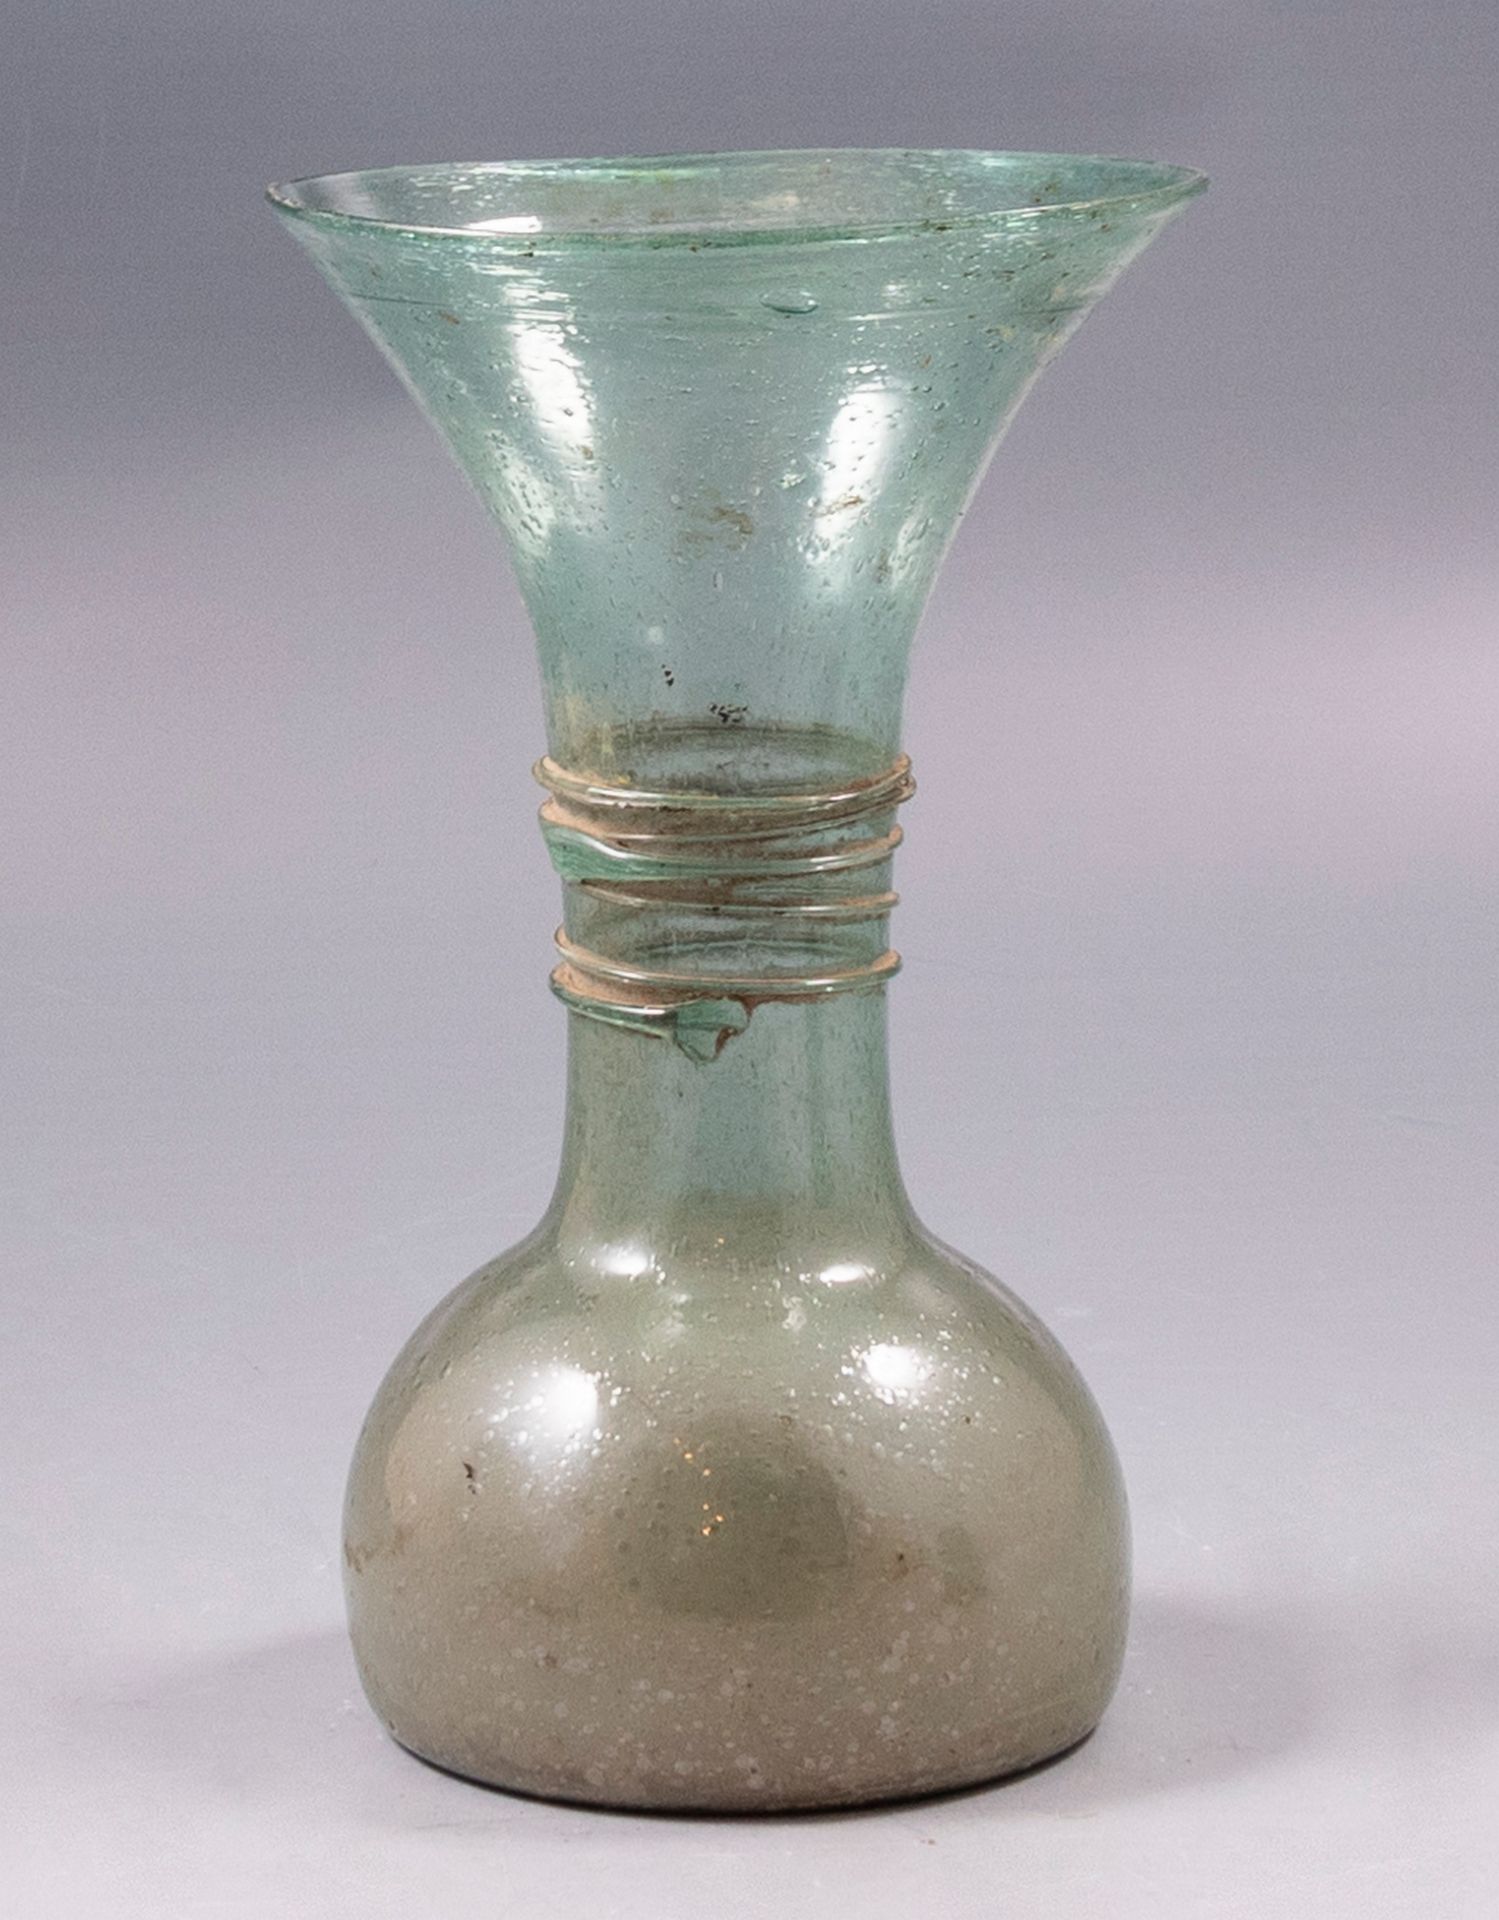 Antique Persian Glass Vase 绿色吹制玻璃花瓶。波斯，萨法维或阿夫沙里德王朝，18世纪。高度：21厘米。